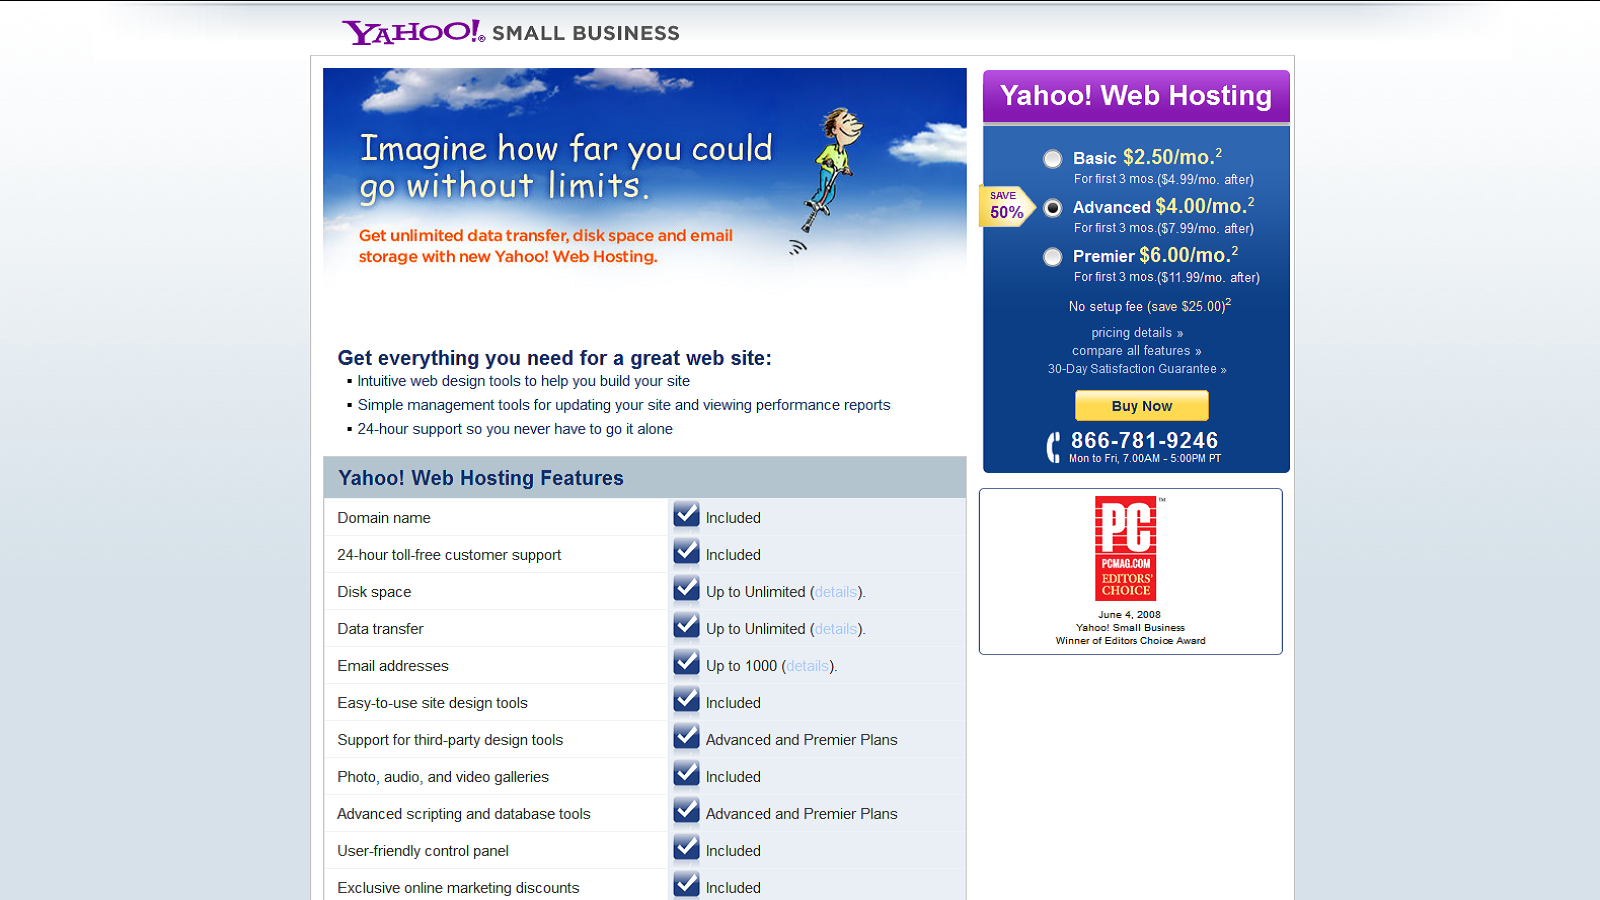 Save 50% With Yahoo! Web Hosting!